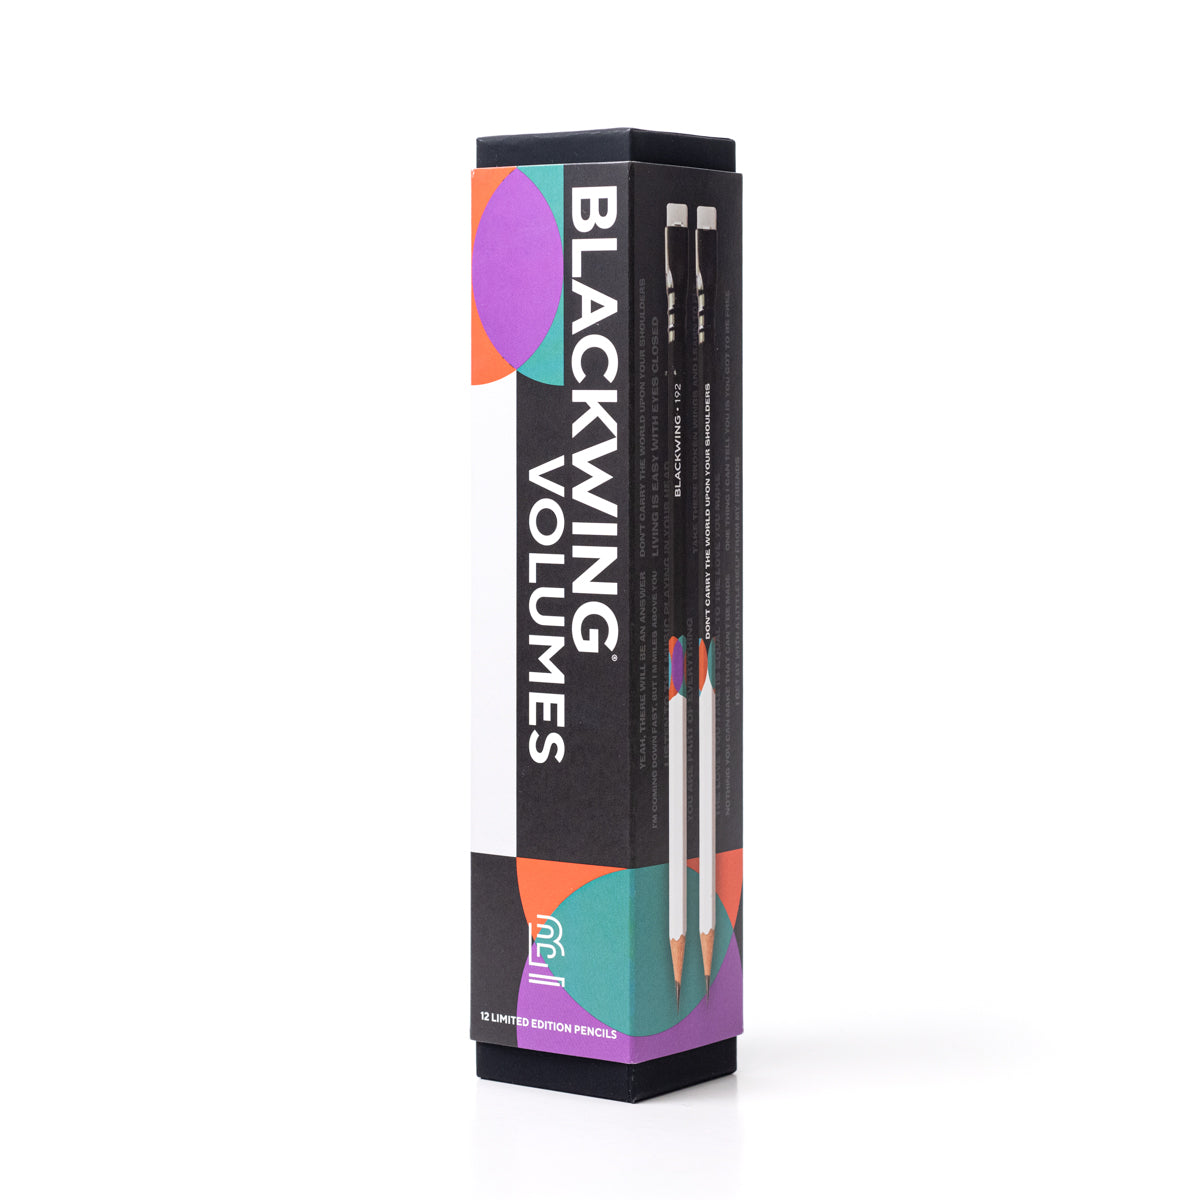 BLACKWING Pencil Limited Edition Volumes 192 Lennon & McCartney Default Title